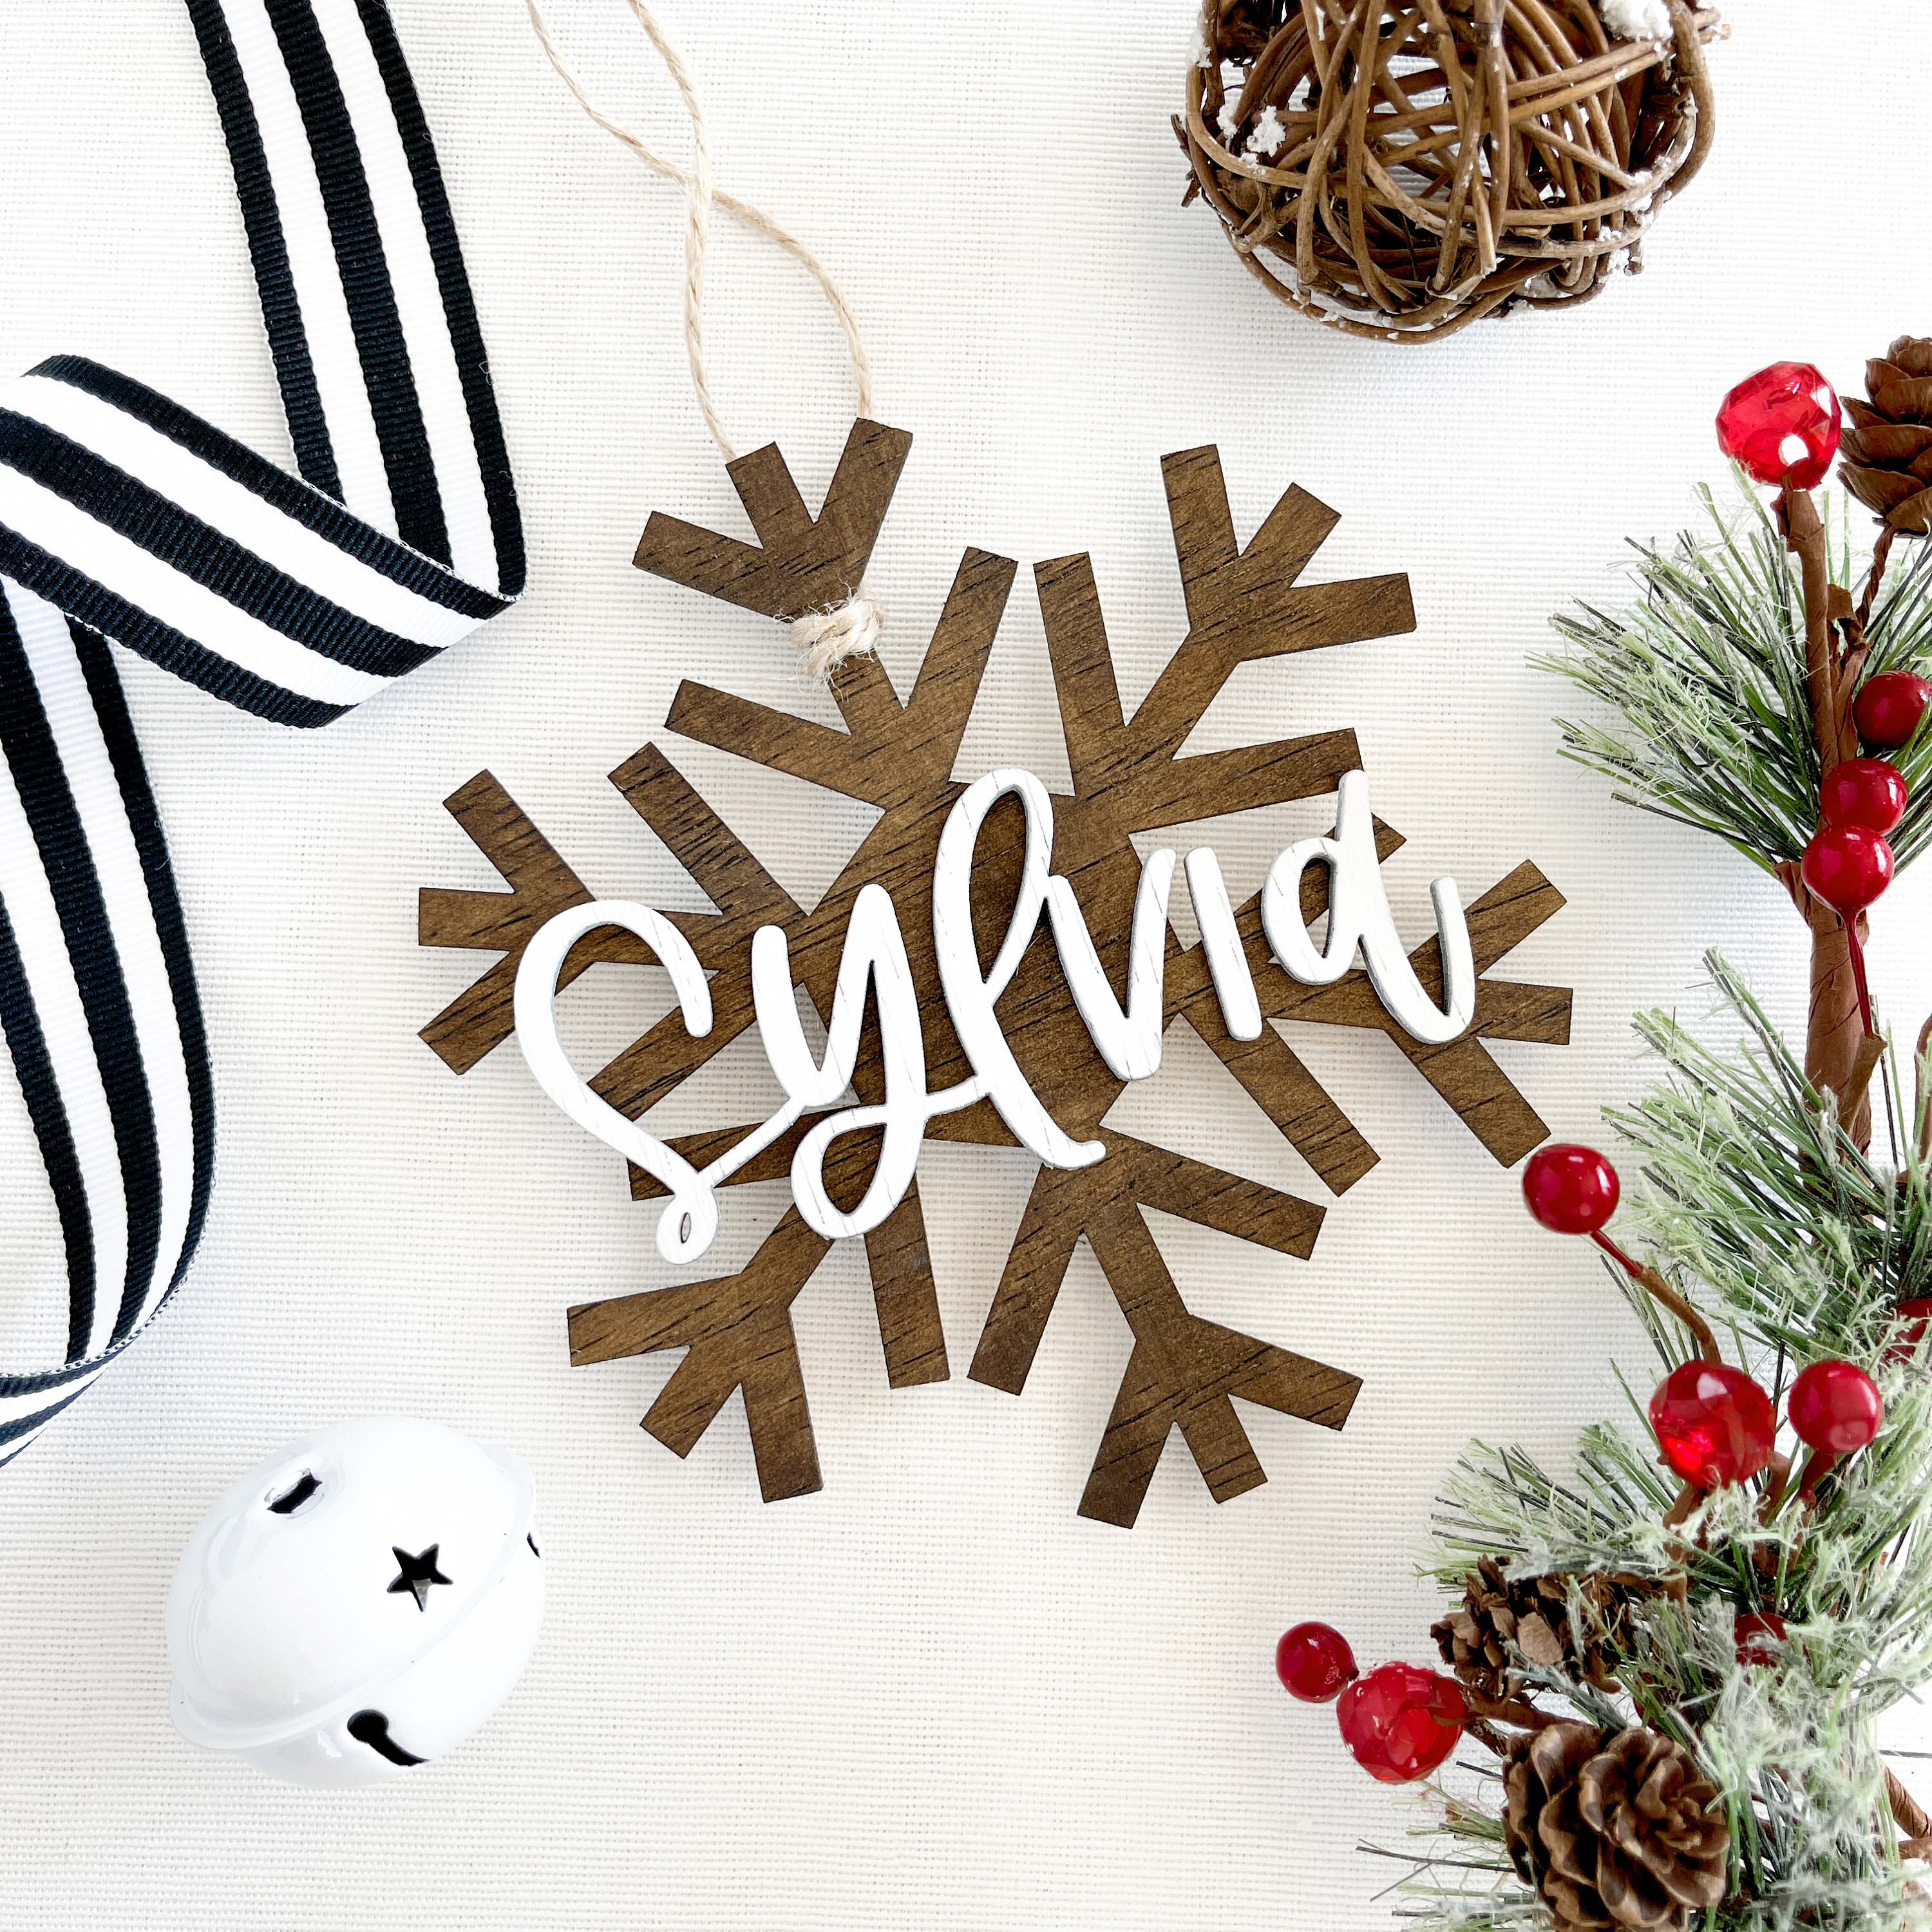 MDF wood LARGE Snowflake shaped Christmas tree ornament/decoration/gift tag 